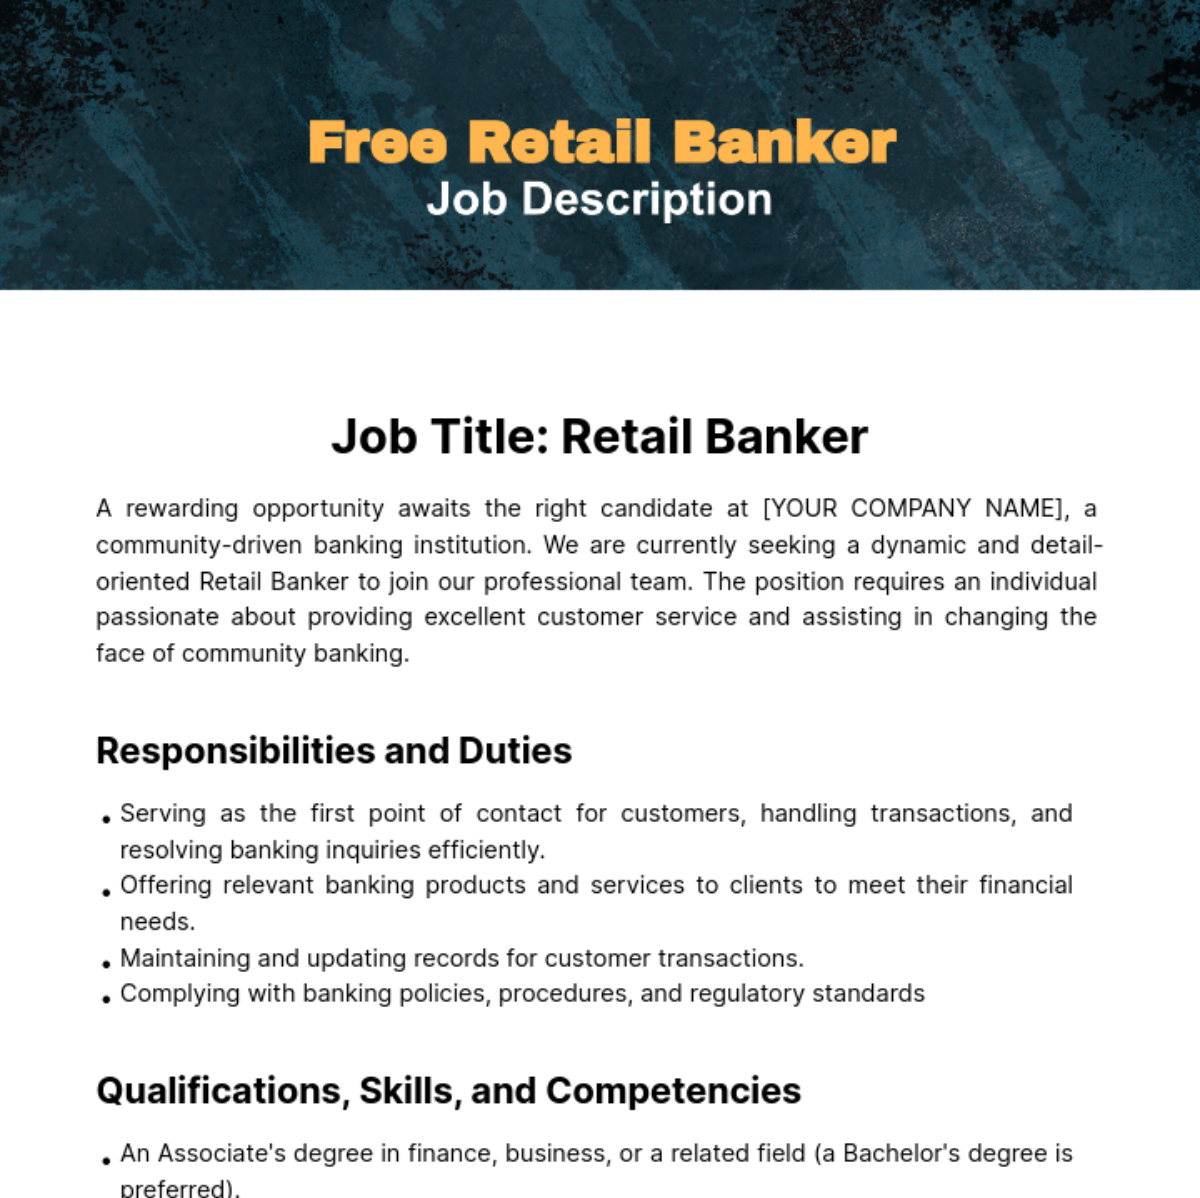 Free Retail Banker Job Description Template